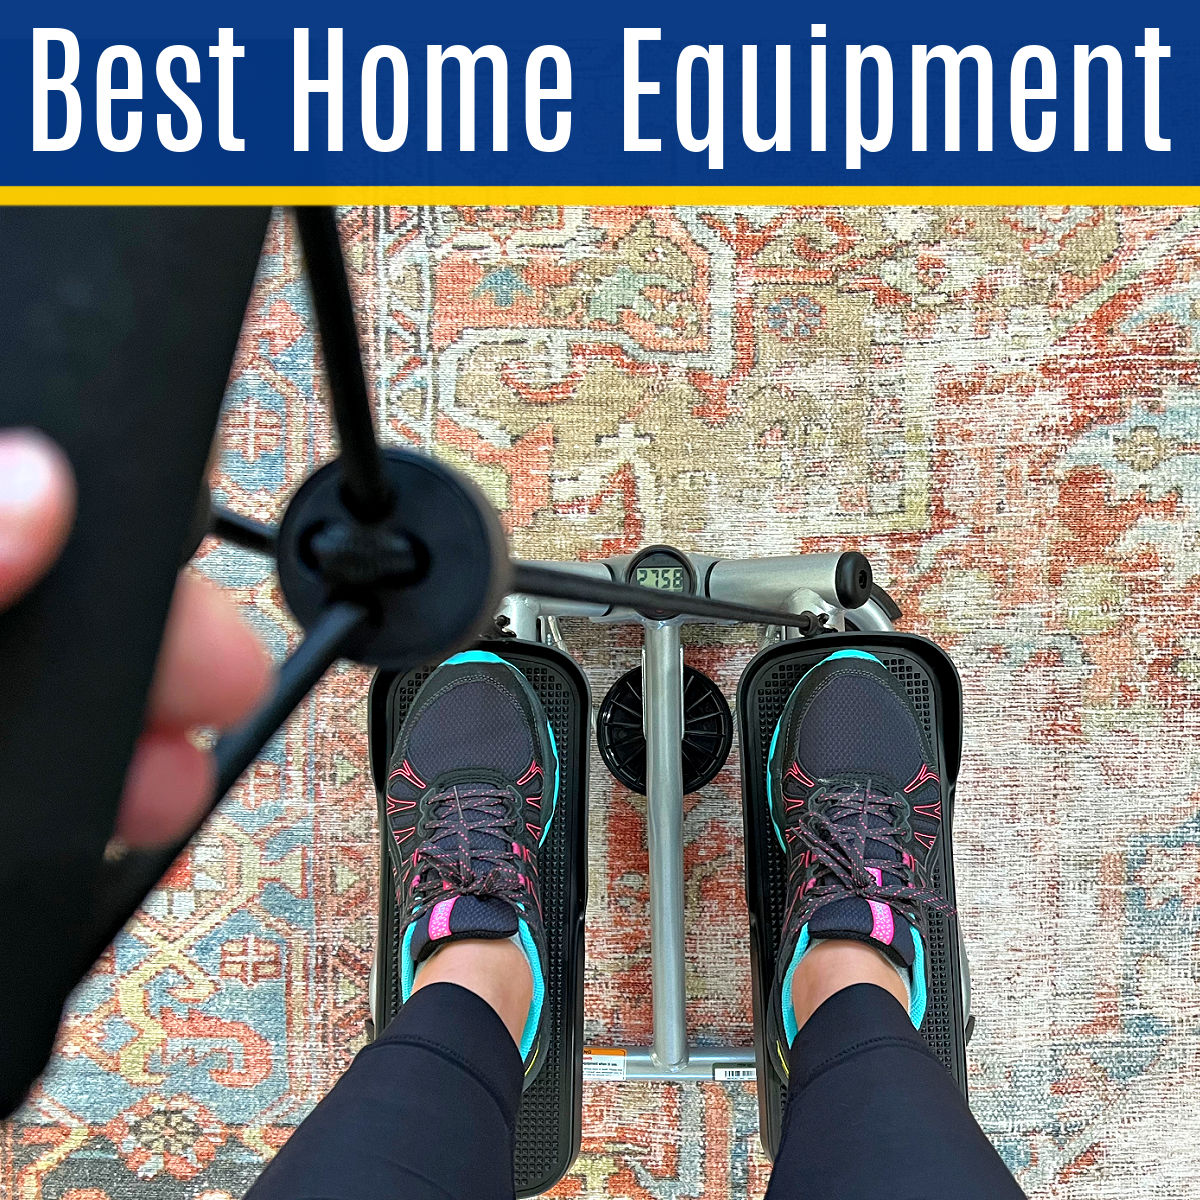 12 Best Picks For Beginner Exercise Equipment For Home Gyms (On A Budget) -  Abbotts At Home